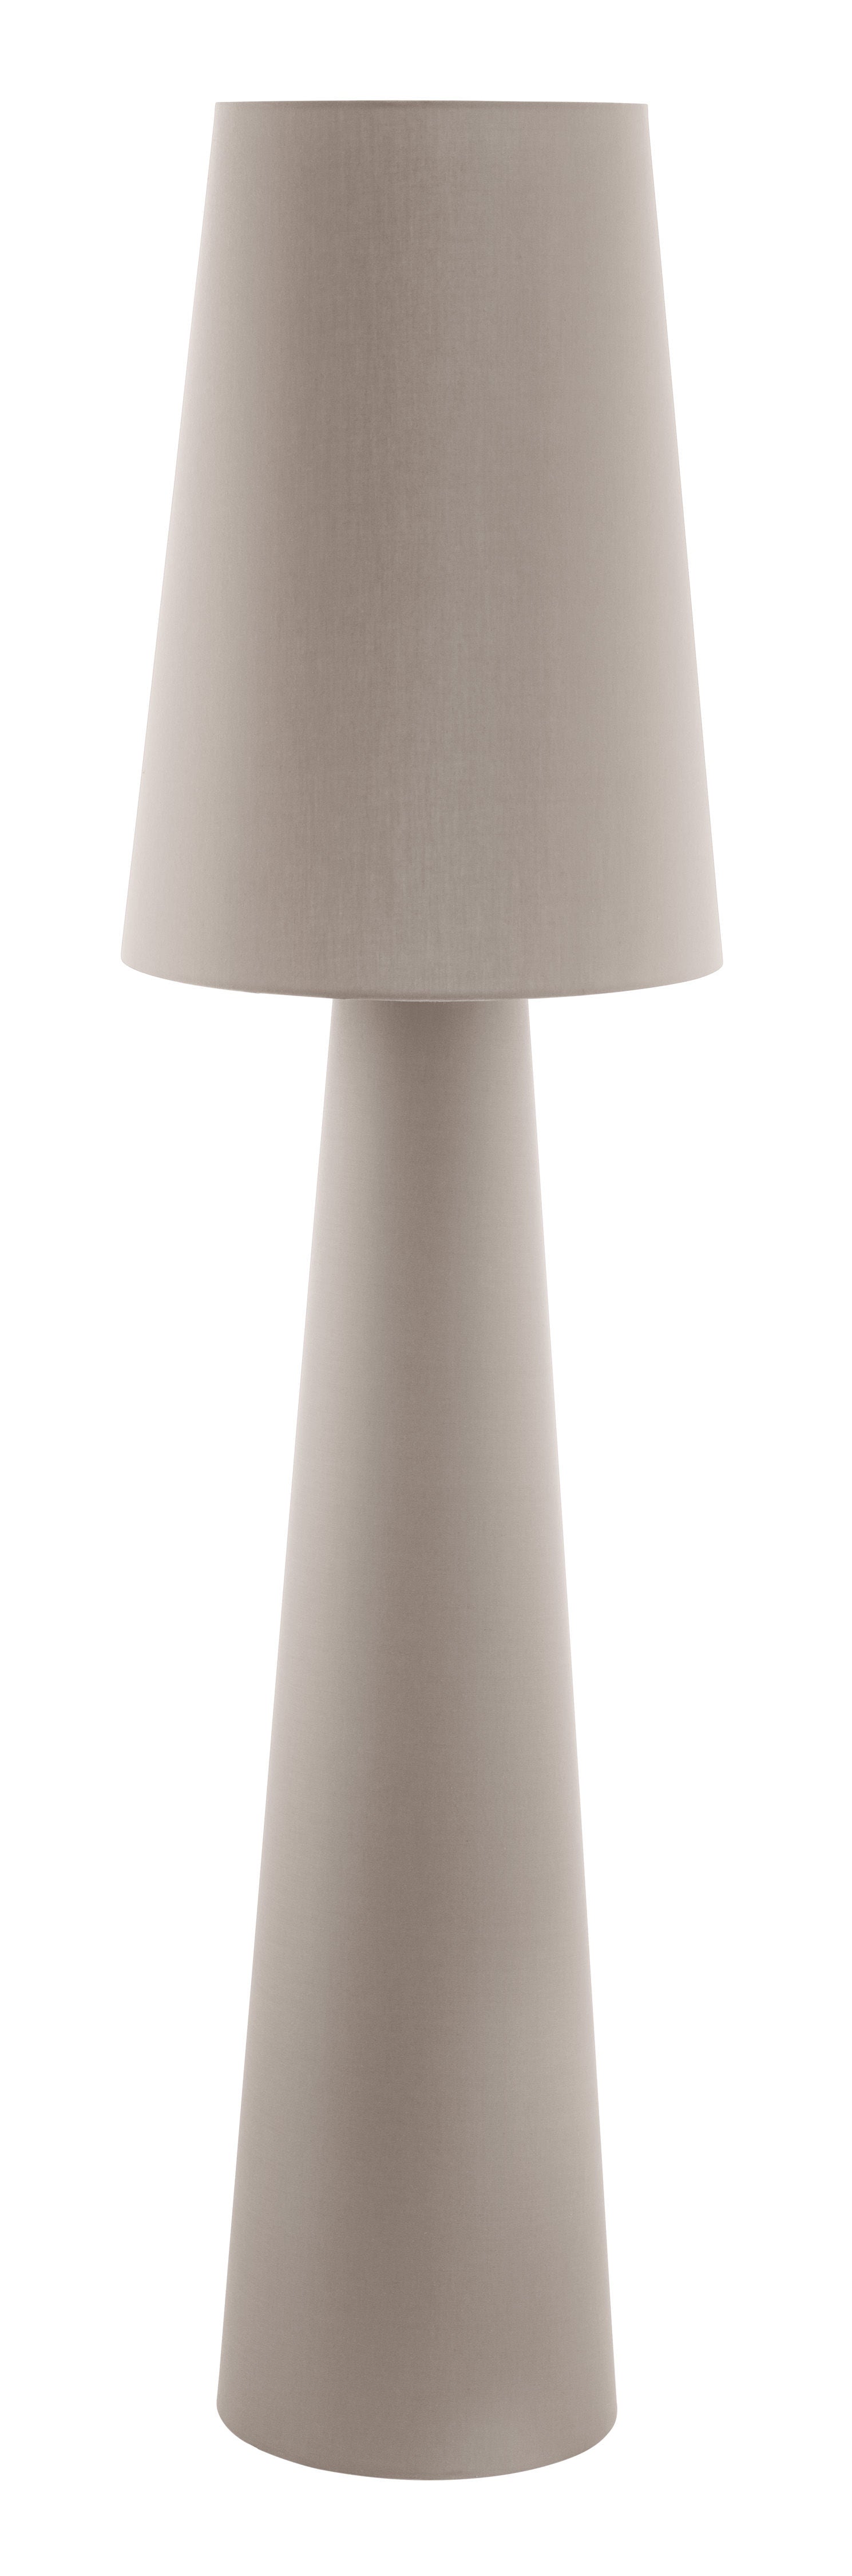 Carpara Lampe sur pied Brun - 97234A | EGLO